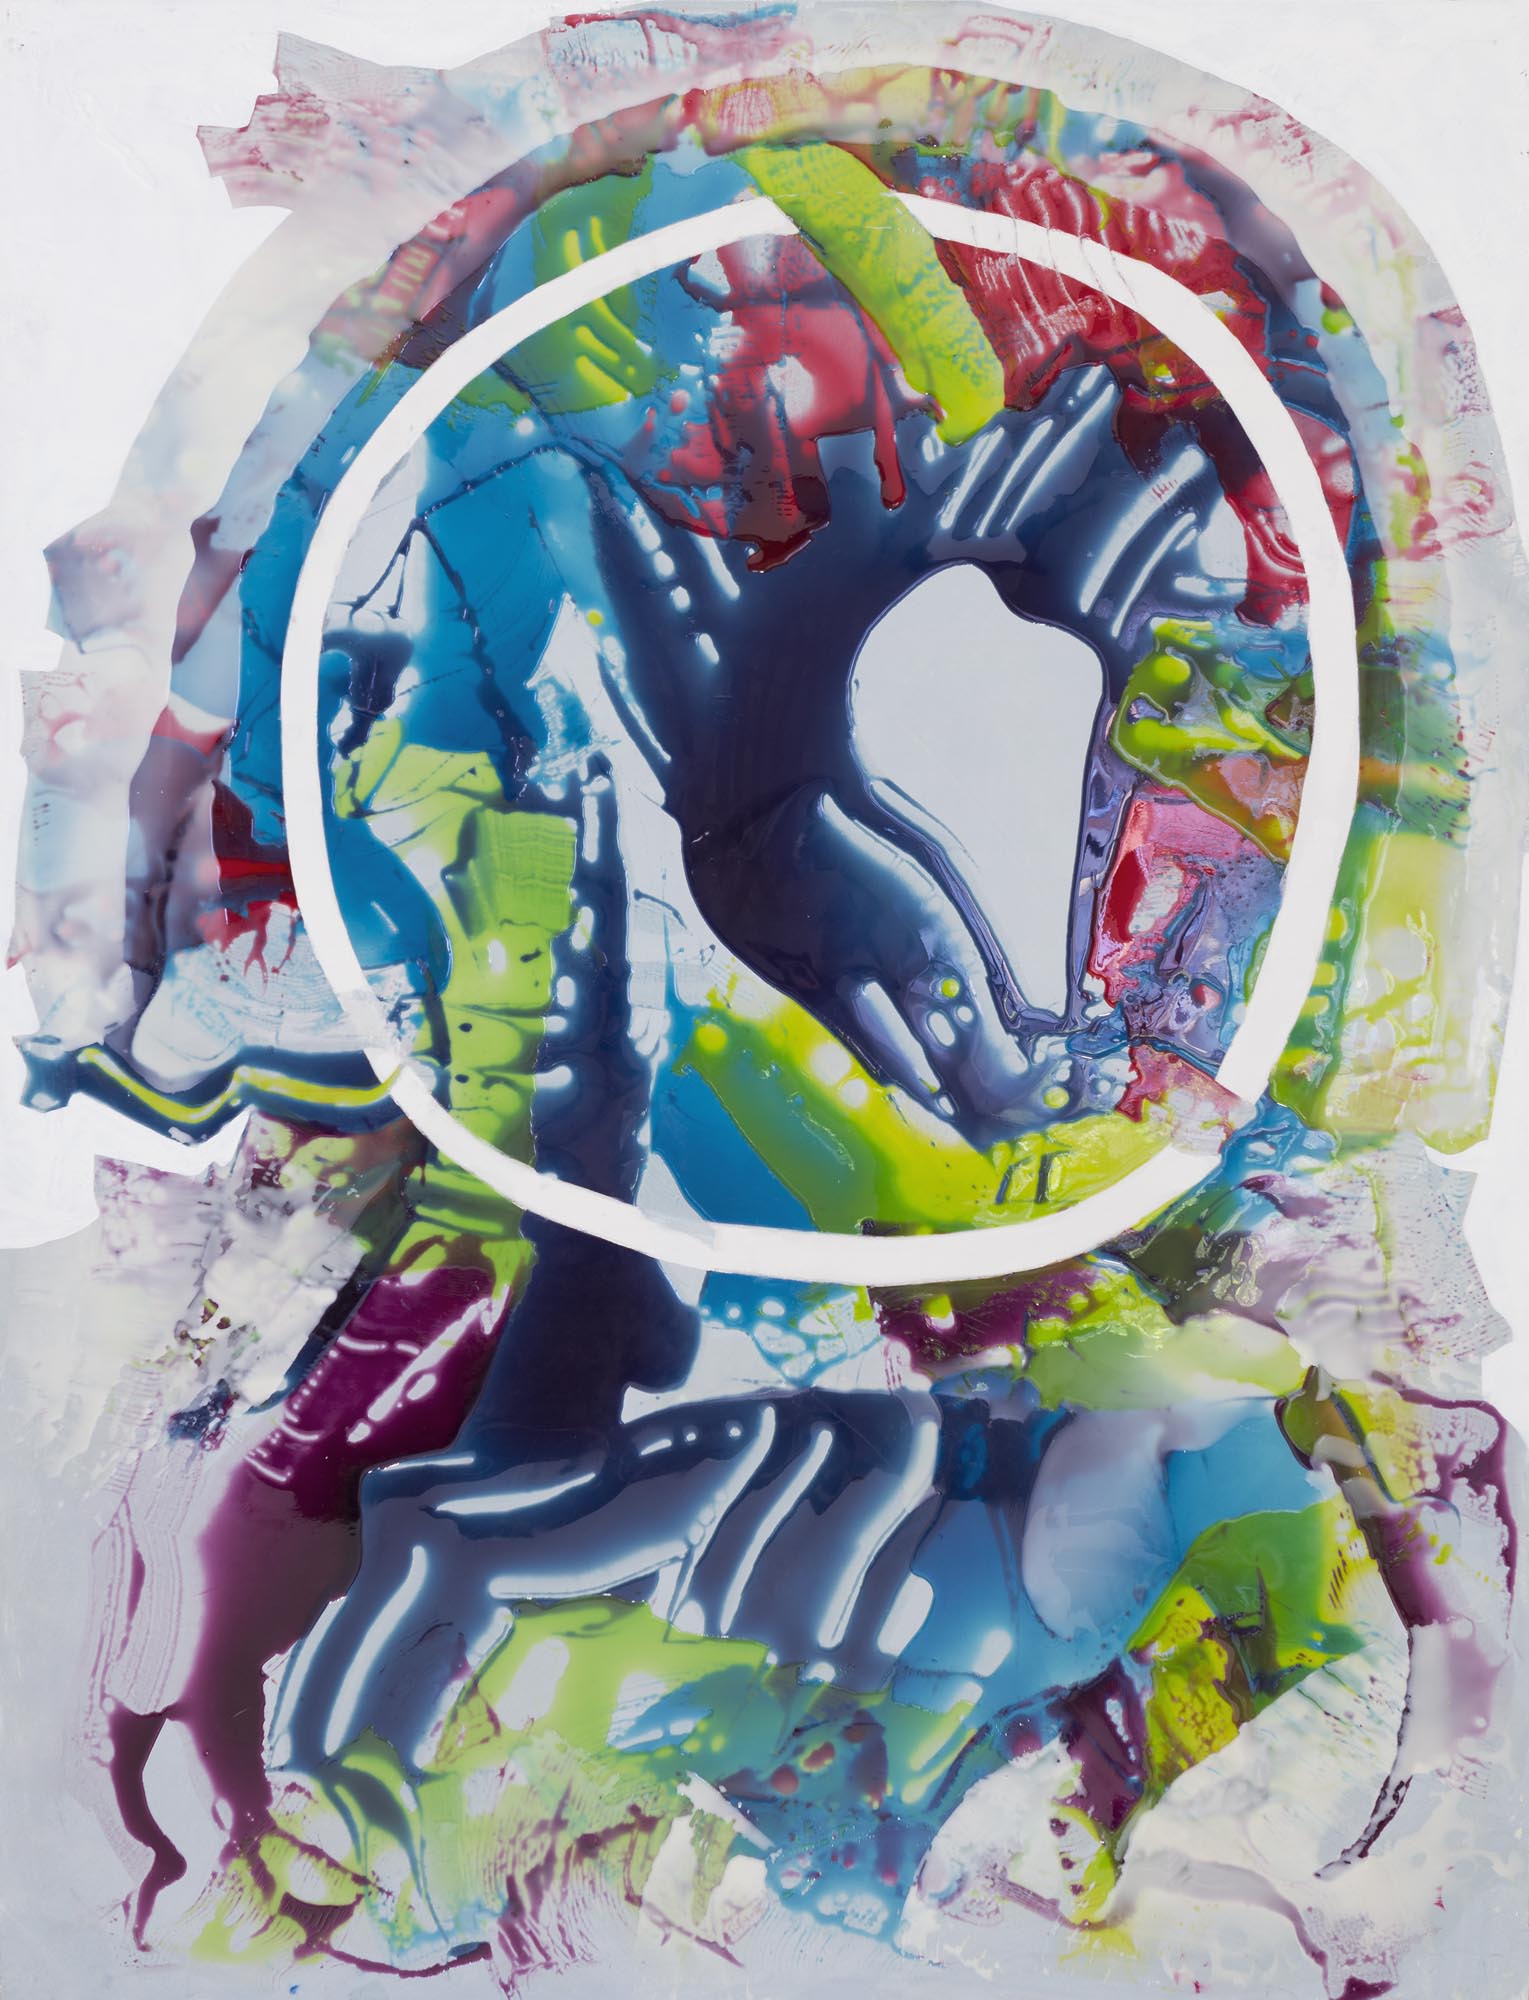 Nino Mustica, September 3 2013, resin, pigment, enamel on canvas 